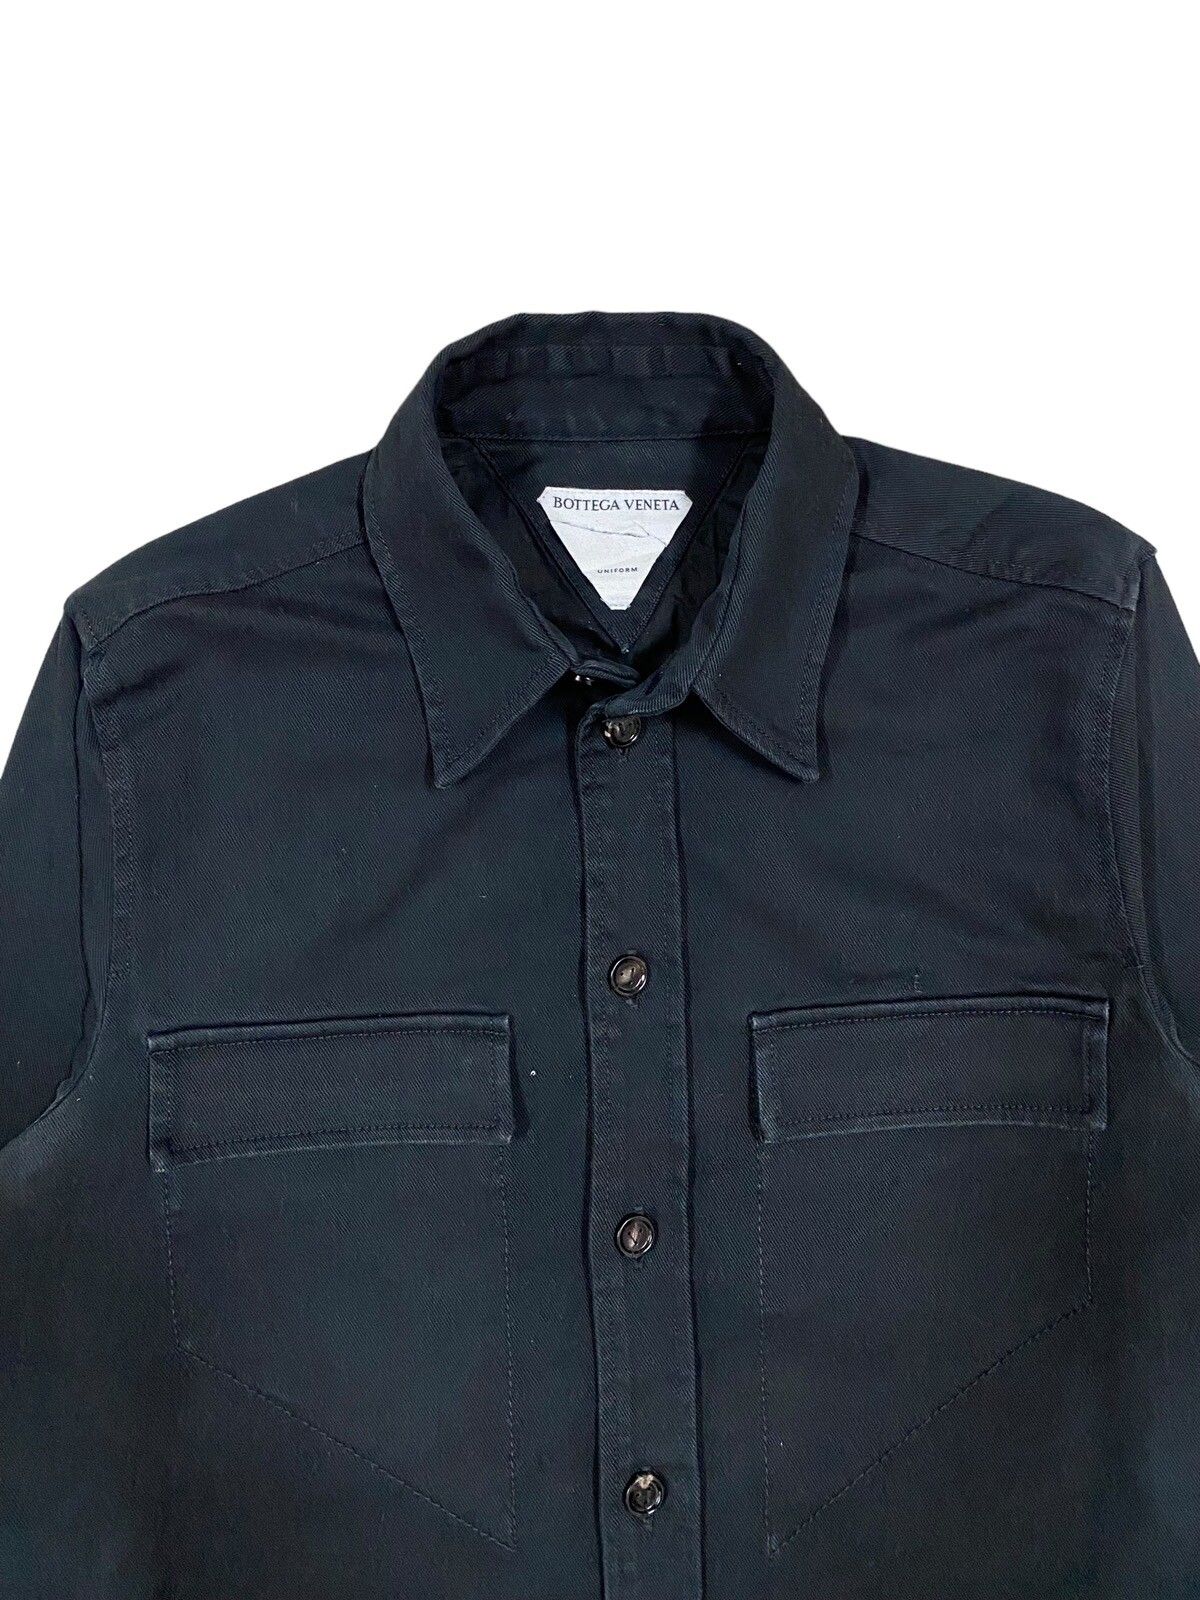 Authentic🔥Bottega Veneta Uniform Cotton Oxford Double Pocket - 3